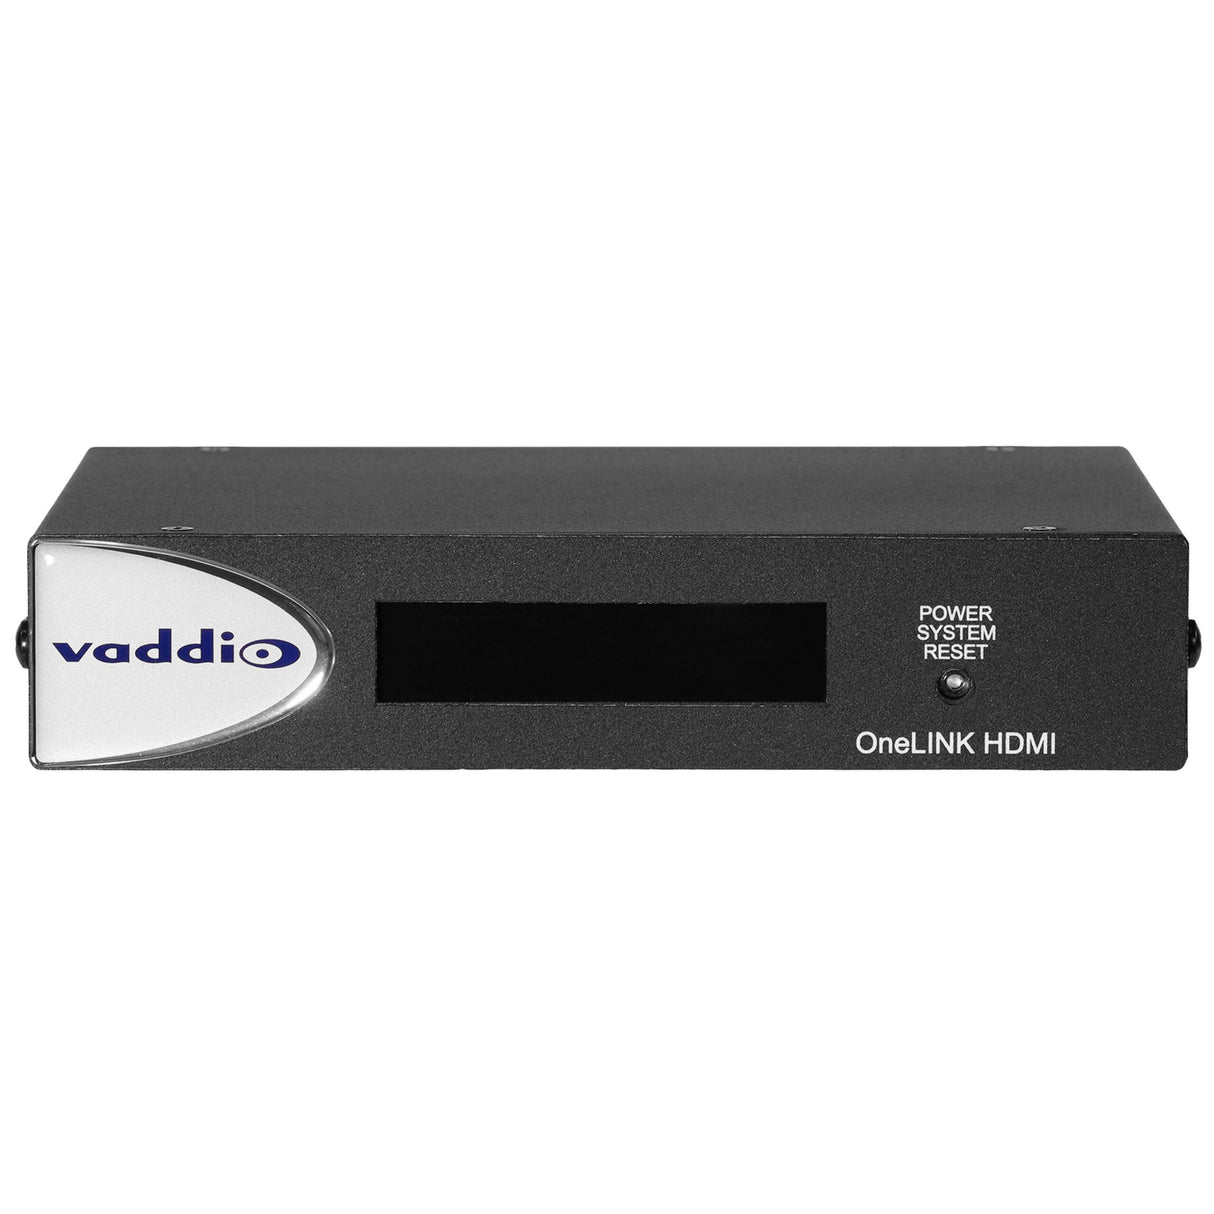 Vaddio 999-99630-100 RoboSHOT 30E HDBT OneLINK HDMI System, Black